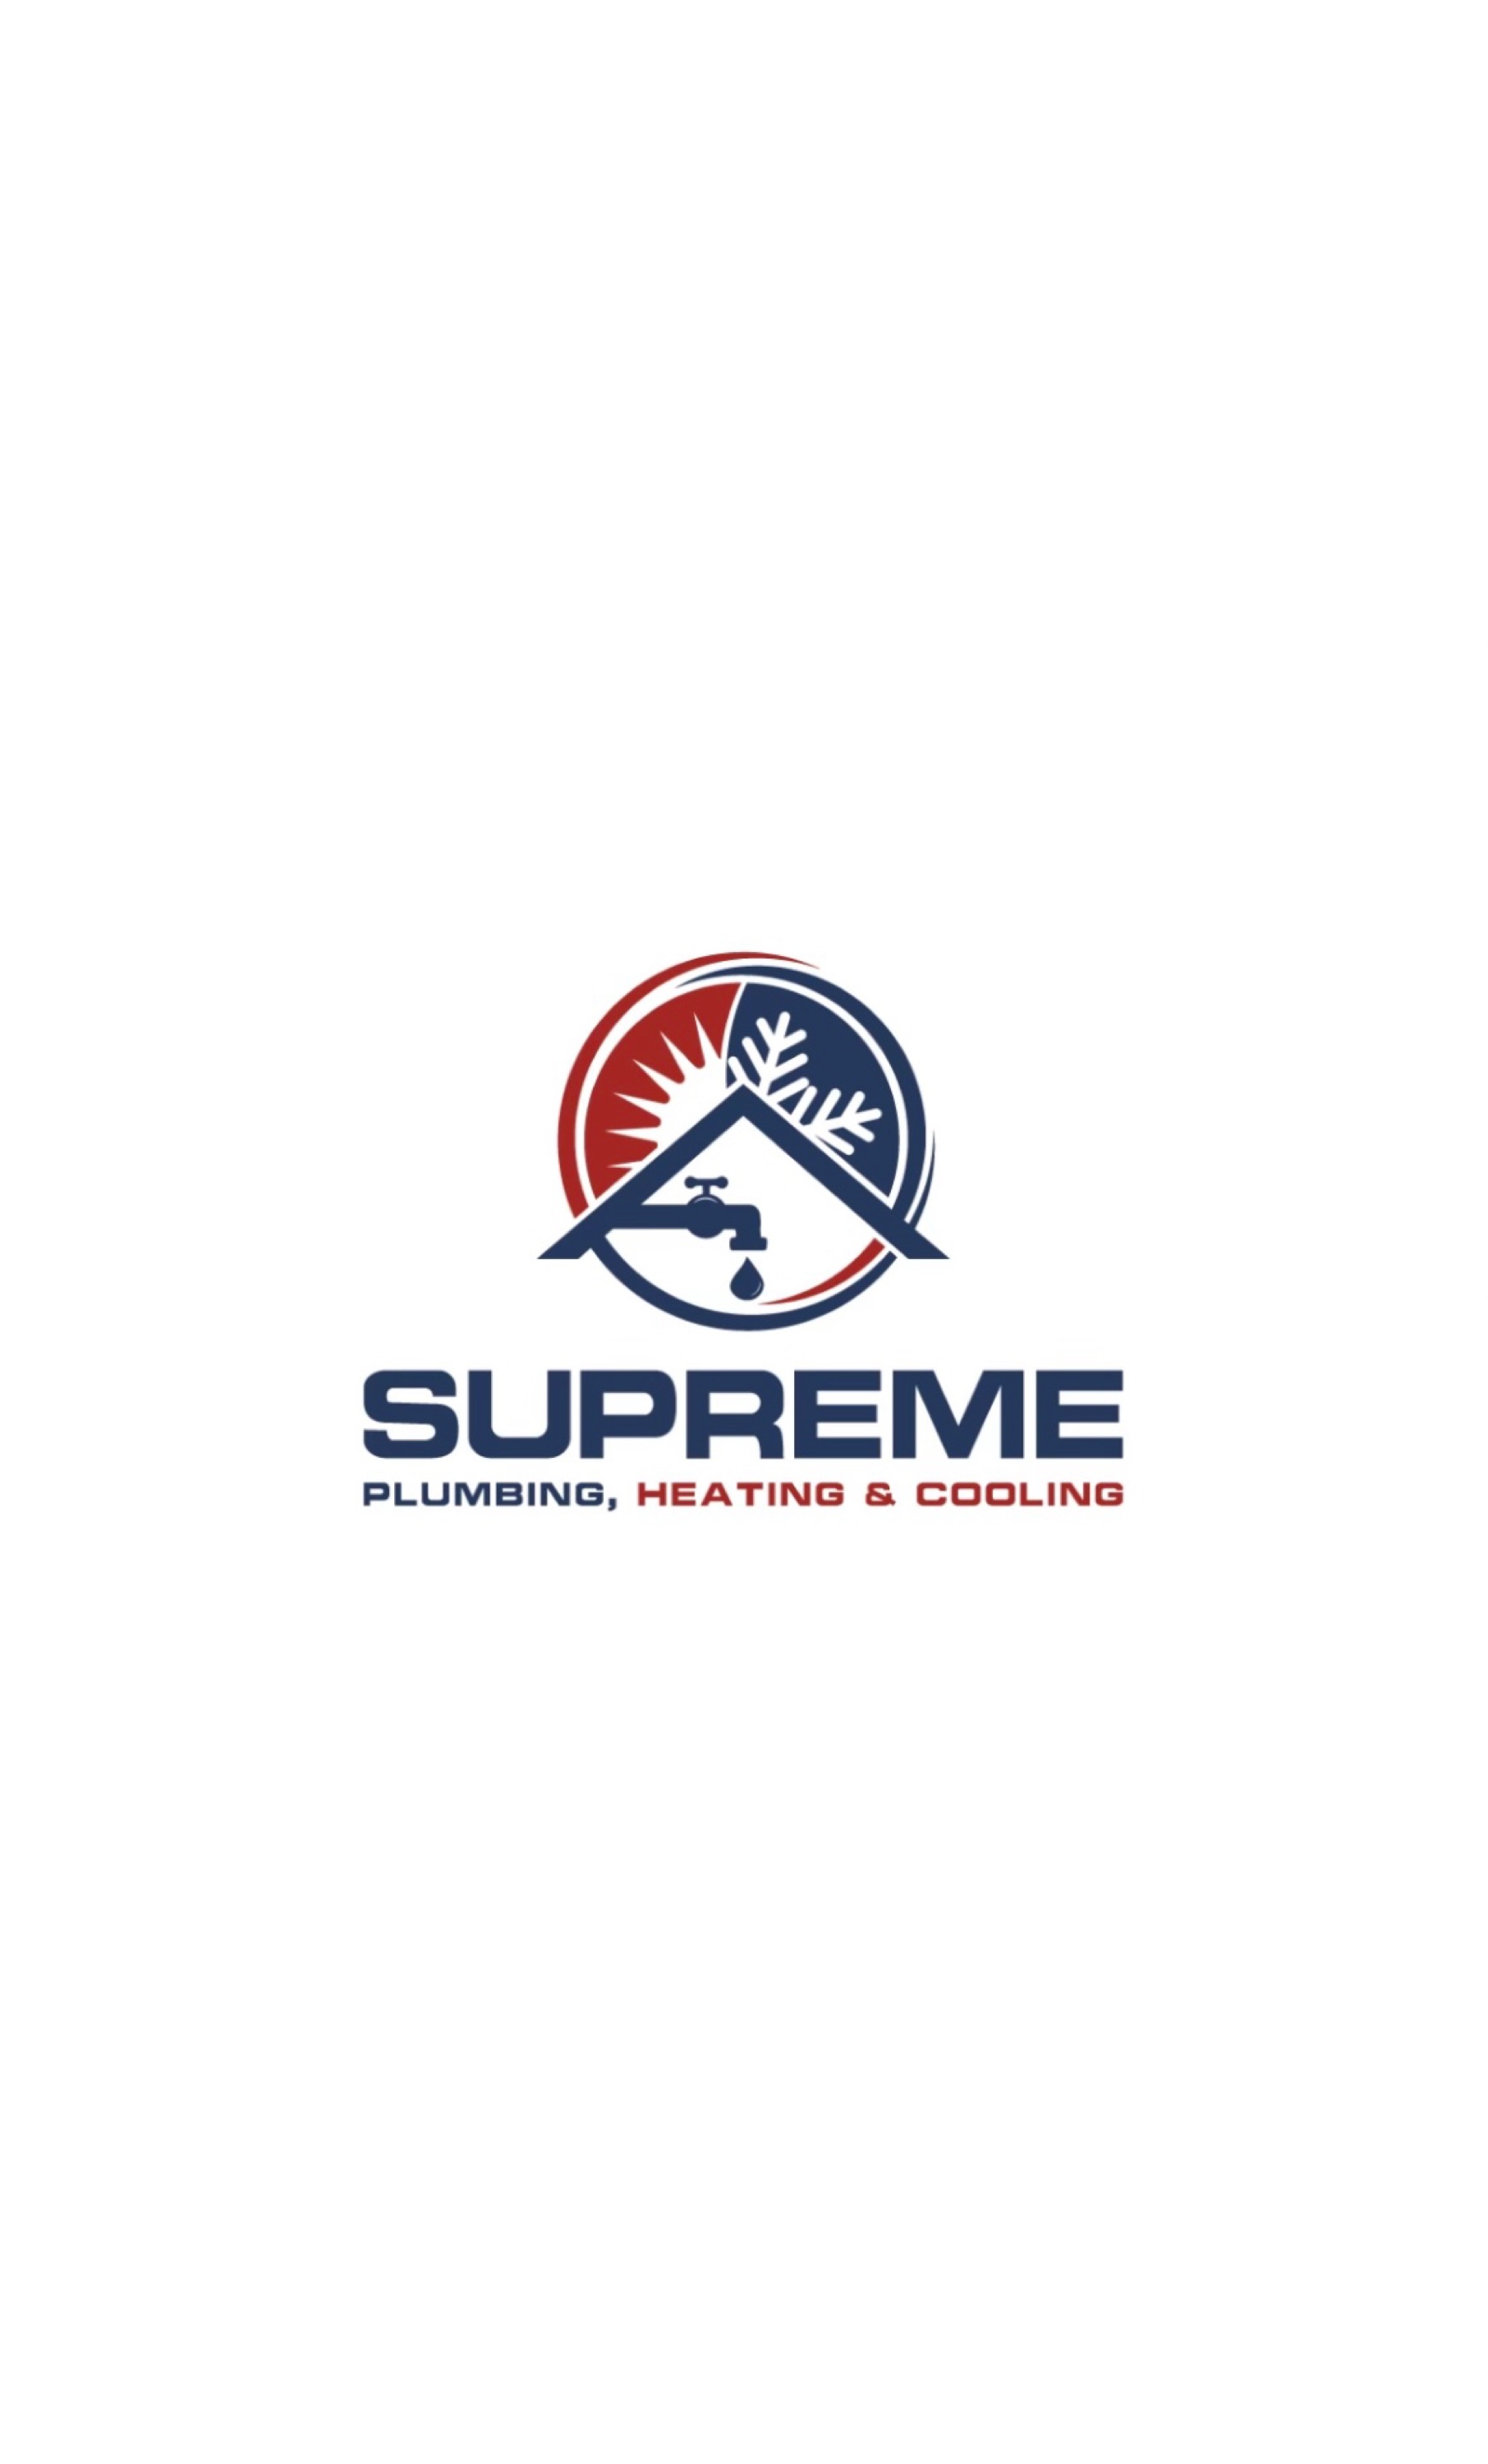 Supreme plumbing and Heating & Cooling Logo